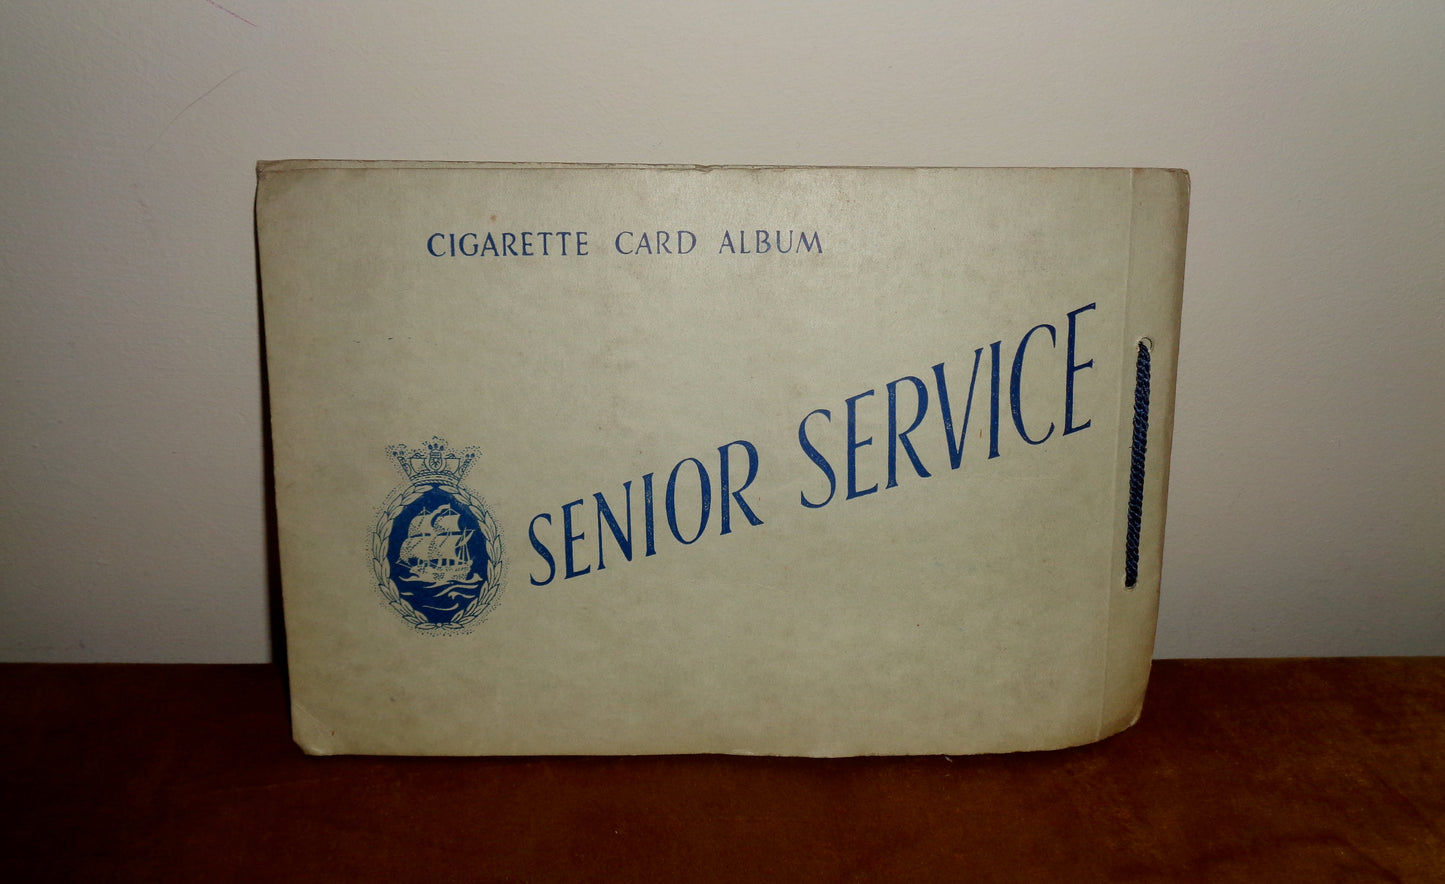 1937 Holiday Haunts By The Sea Senior Service Cigarette Card Album